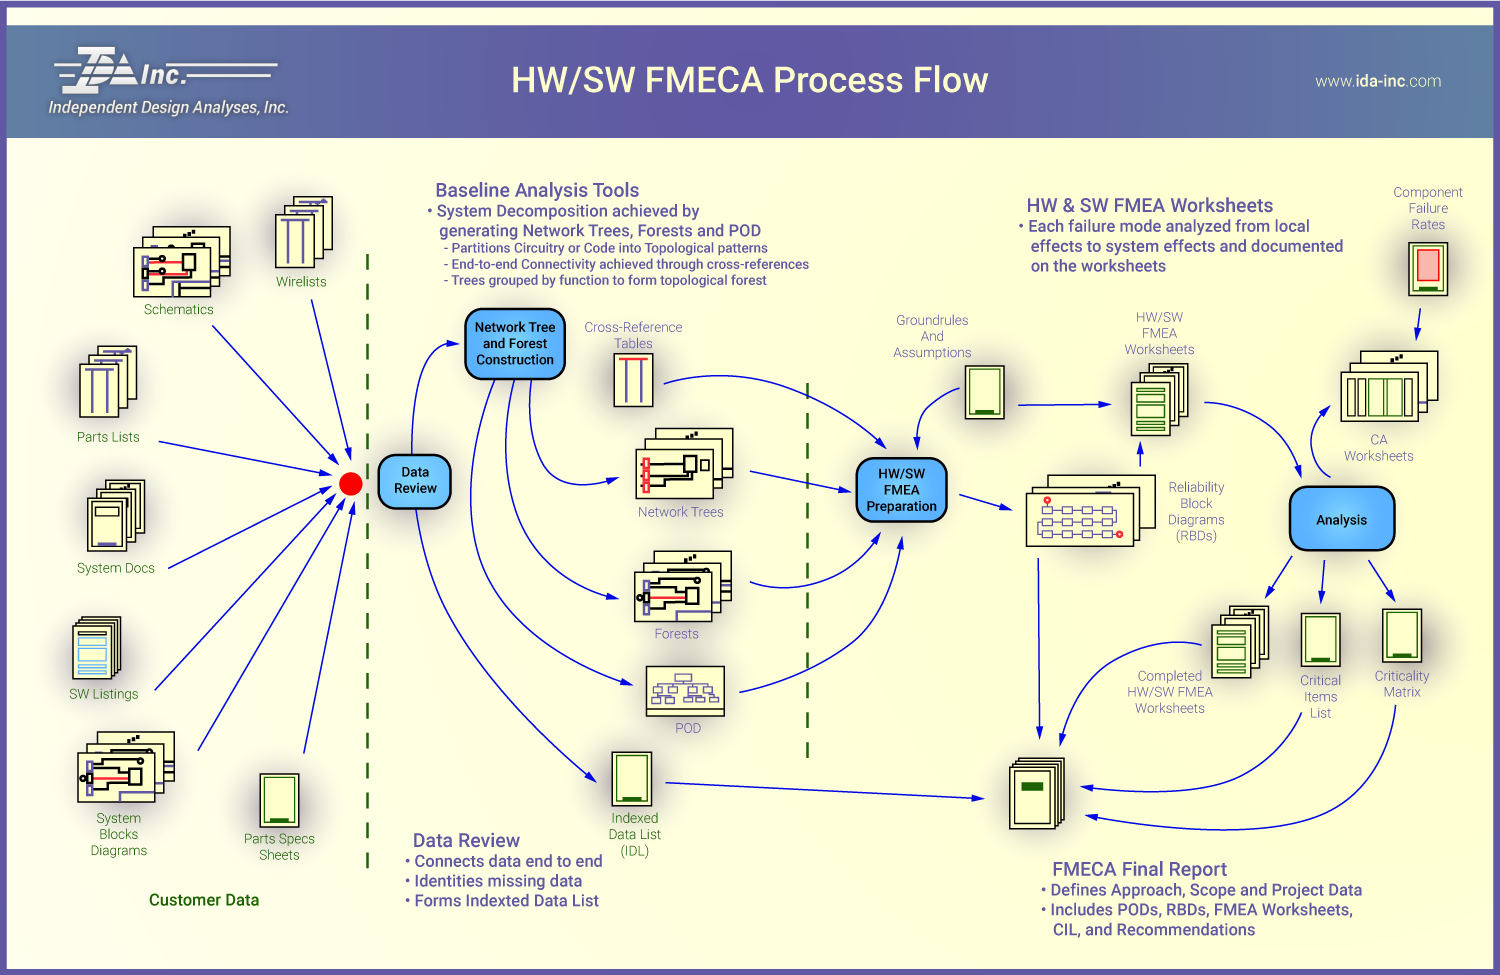 Hardware Software FMECA Process FLow - IDA Inc